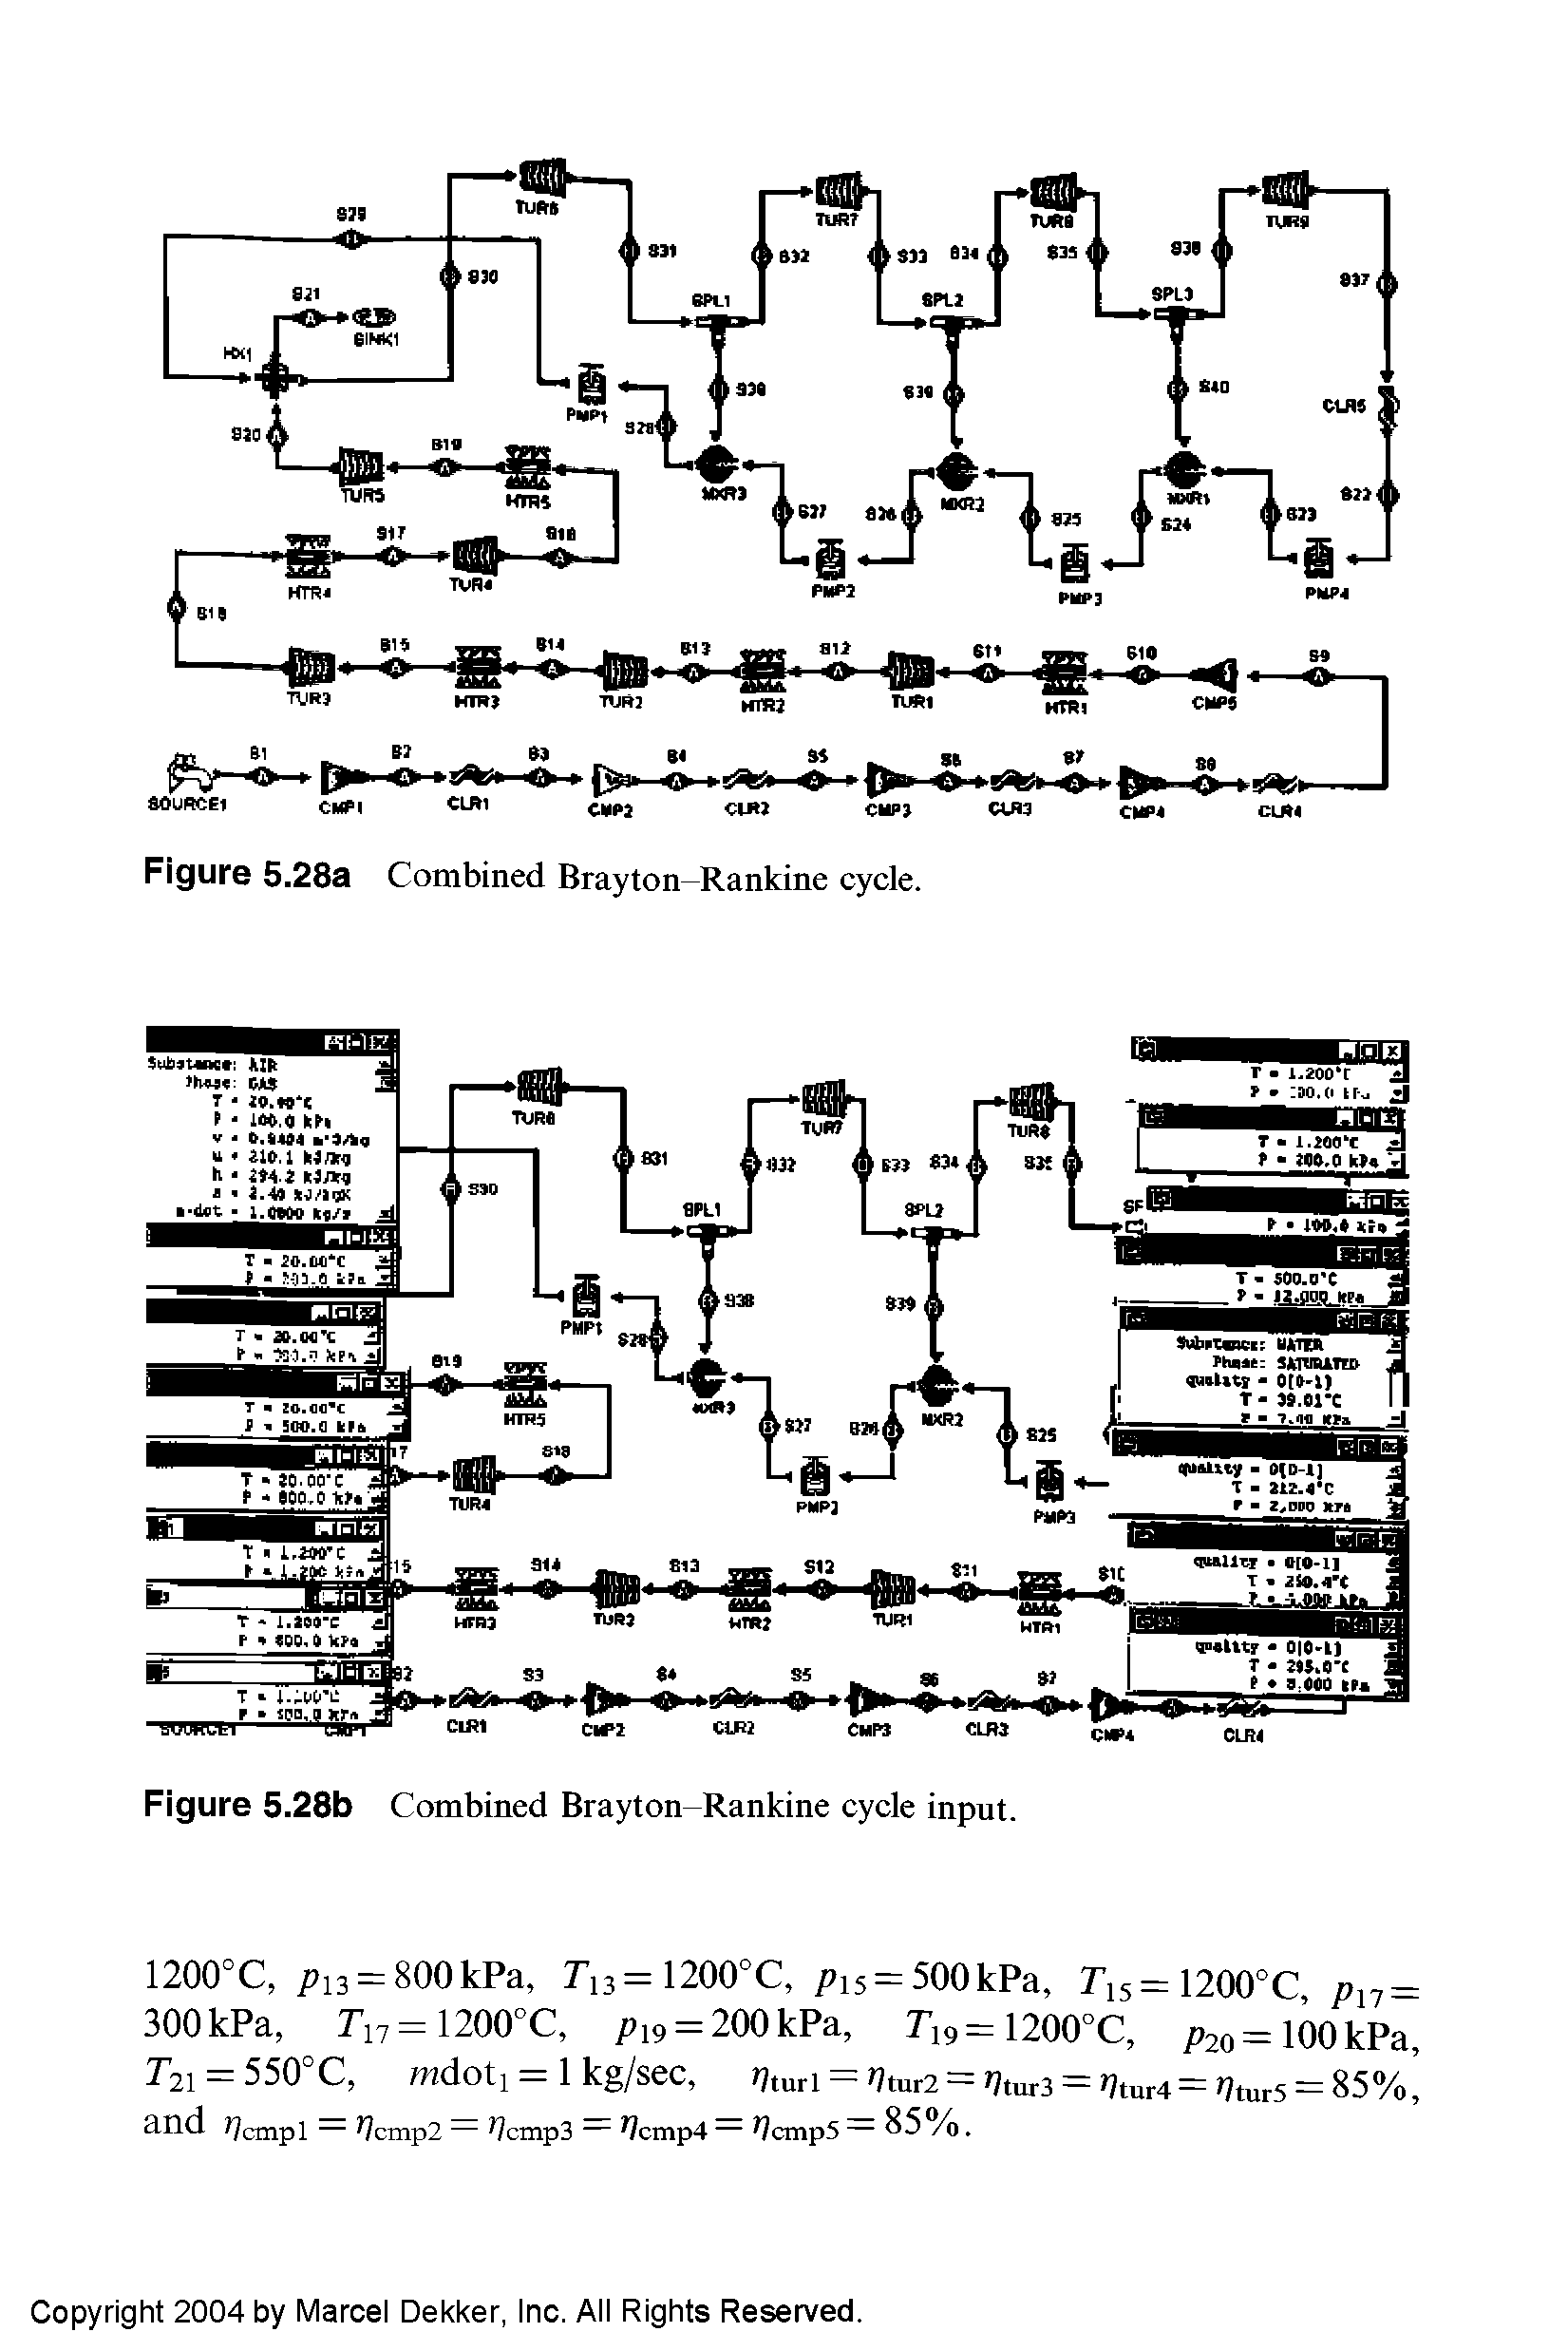 Figure 5.28b Combined Brayton-Rankine cycle input.